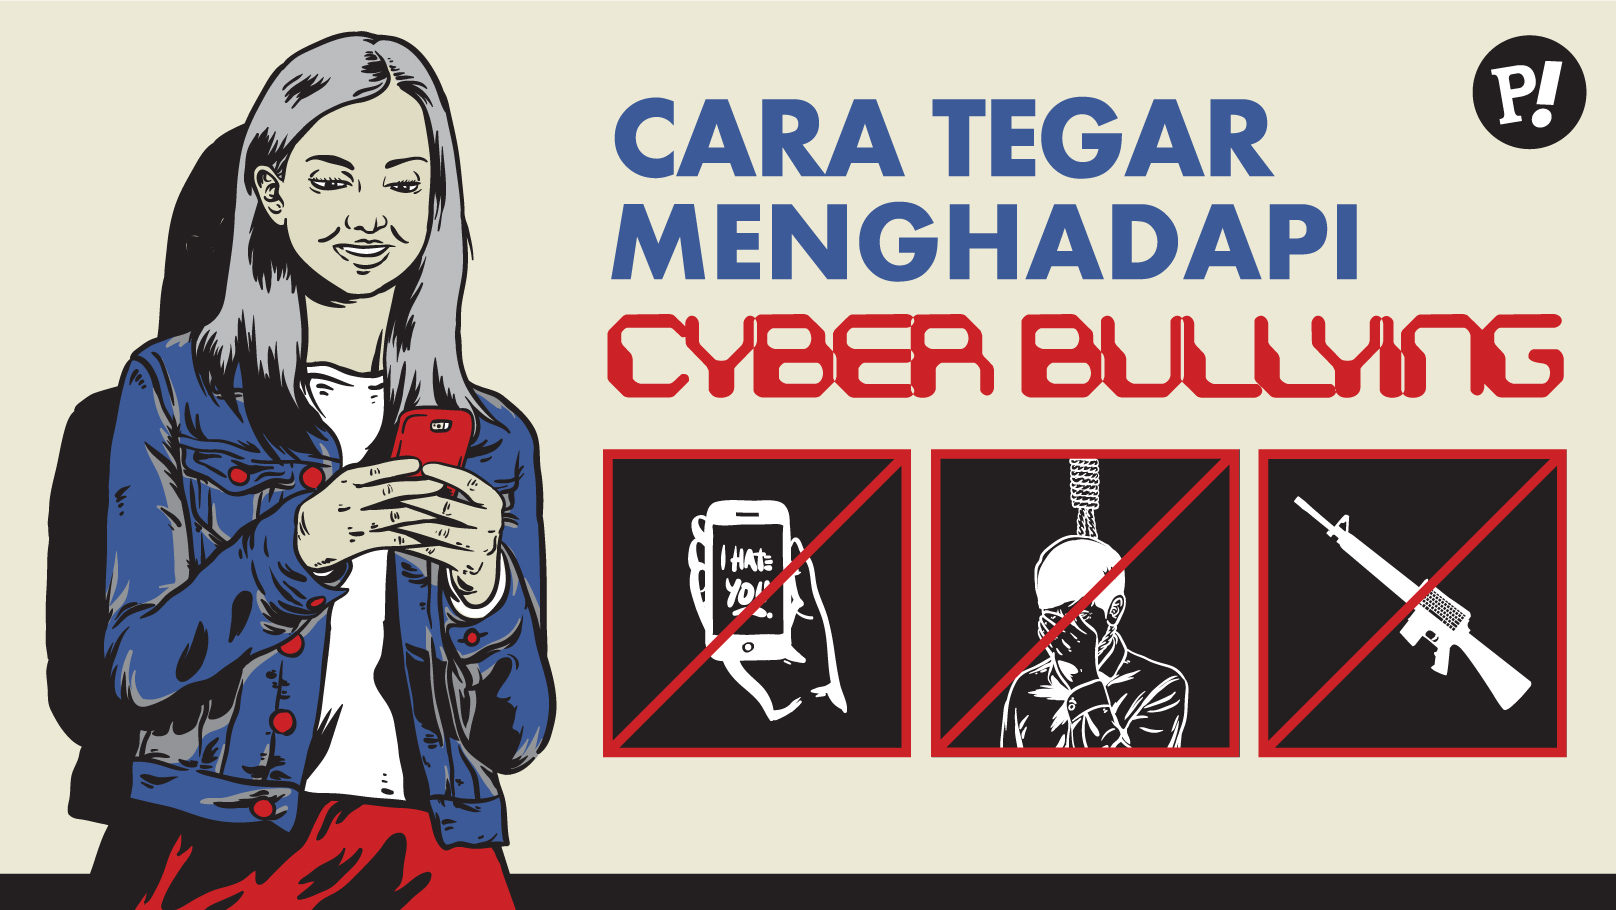 Cara Tegar Menghadapi Cyber Bullying